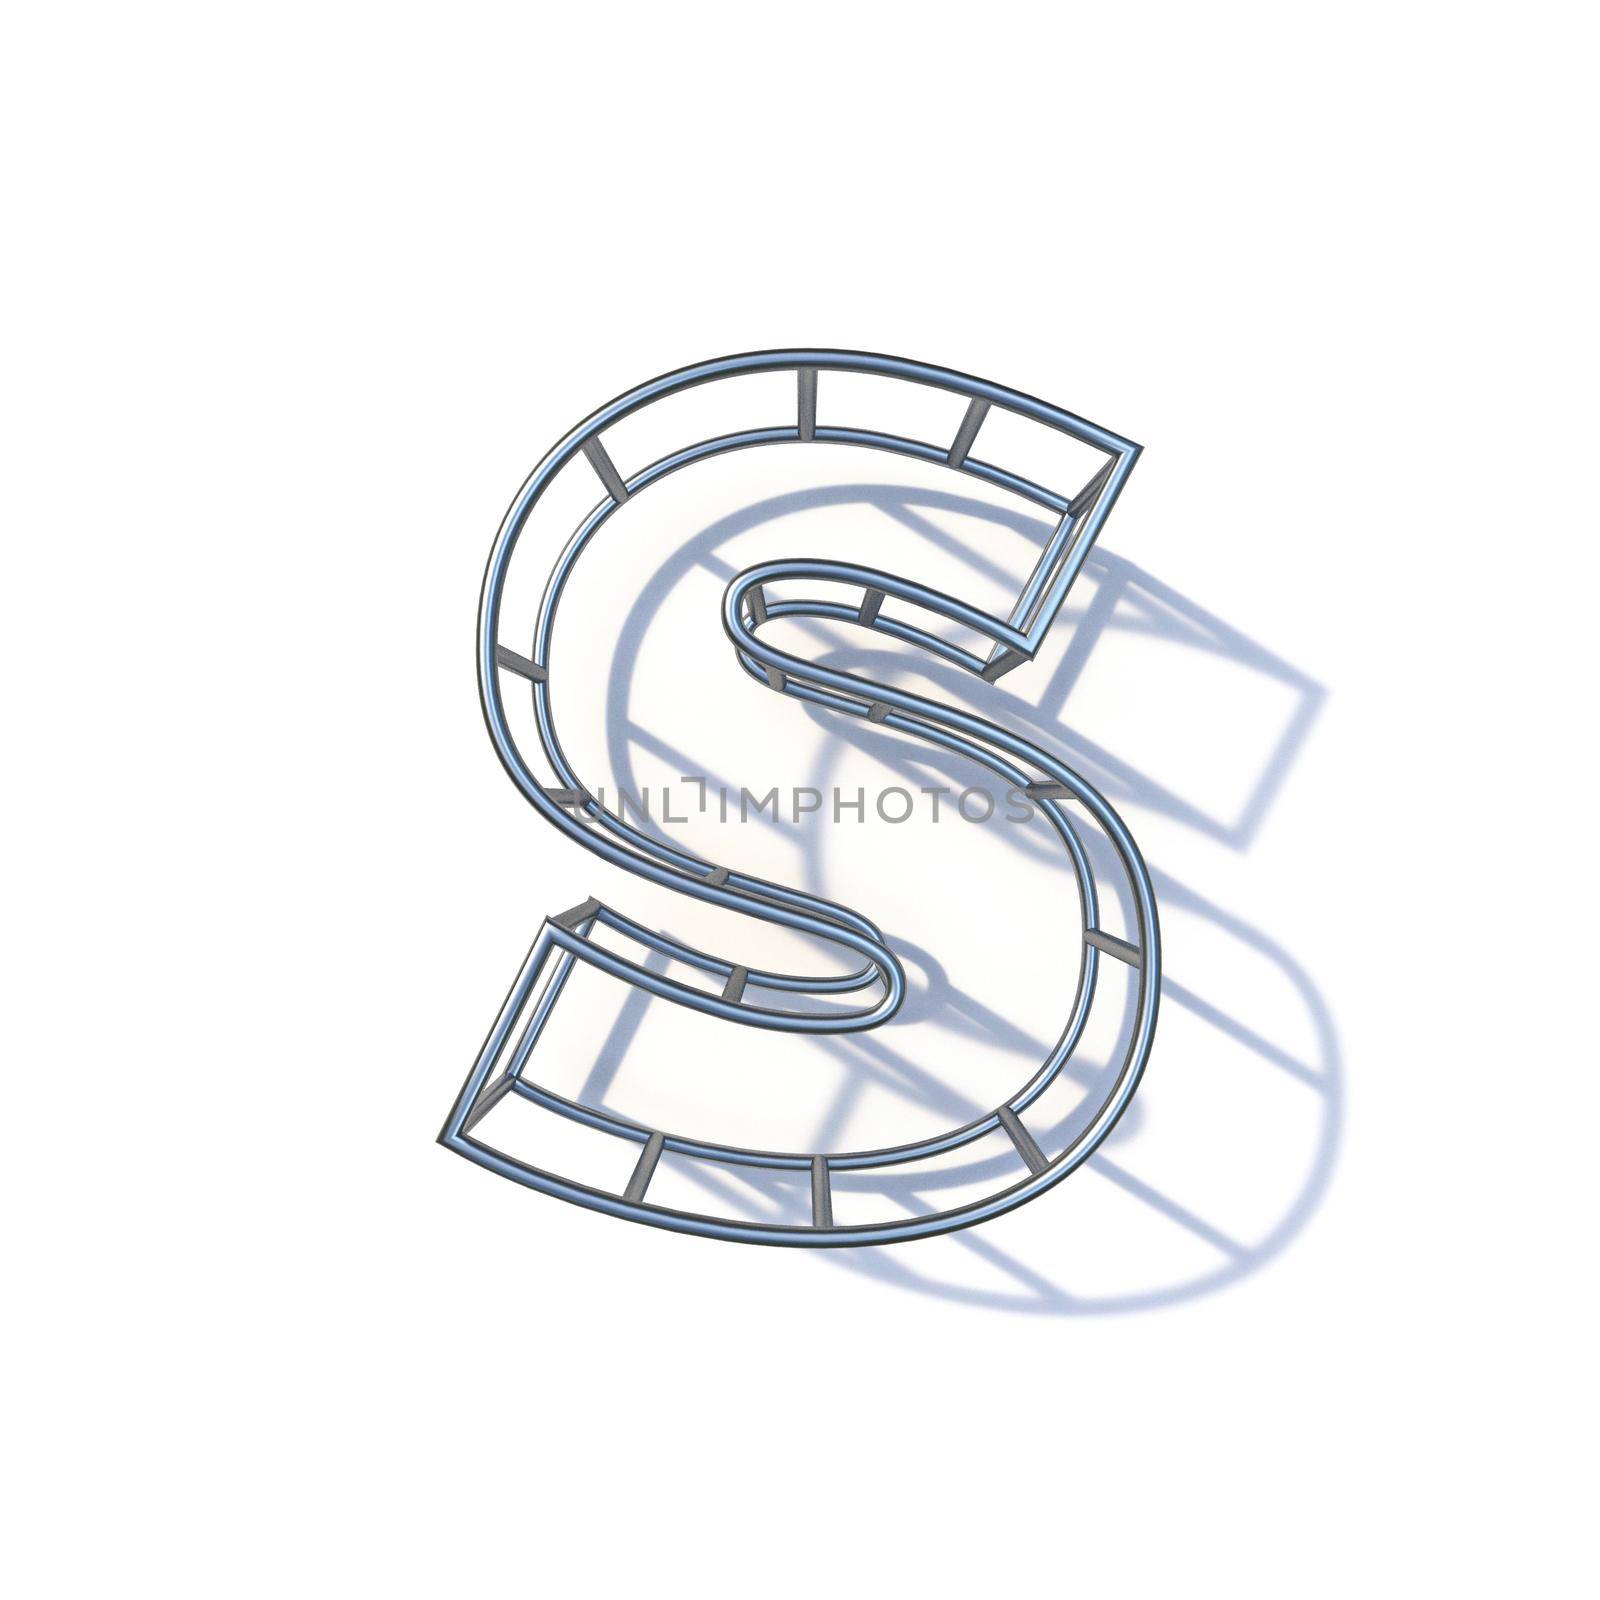 Steel wire frame font Letter S 3D render illustration isolated on white background